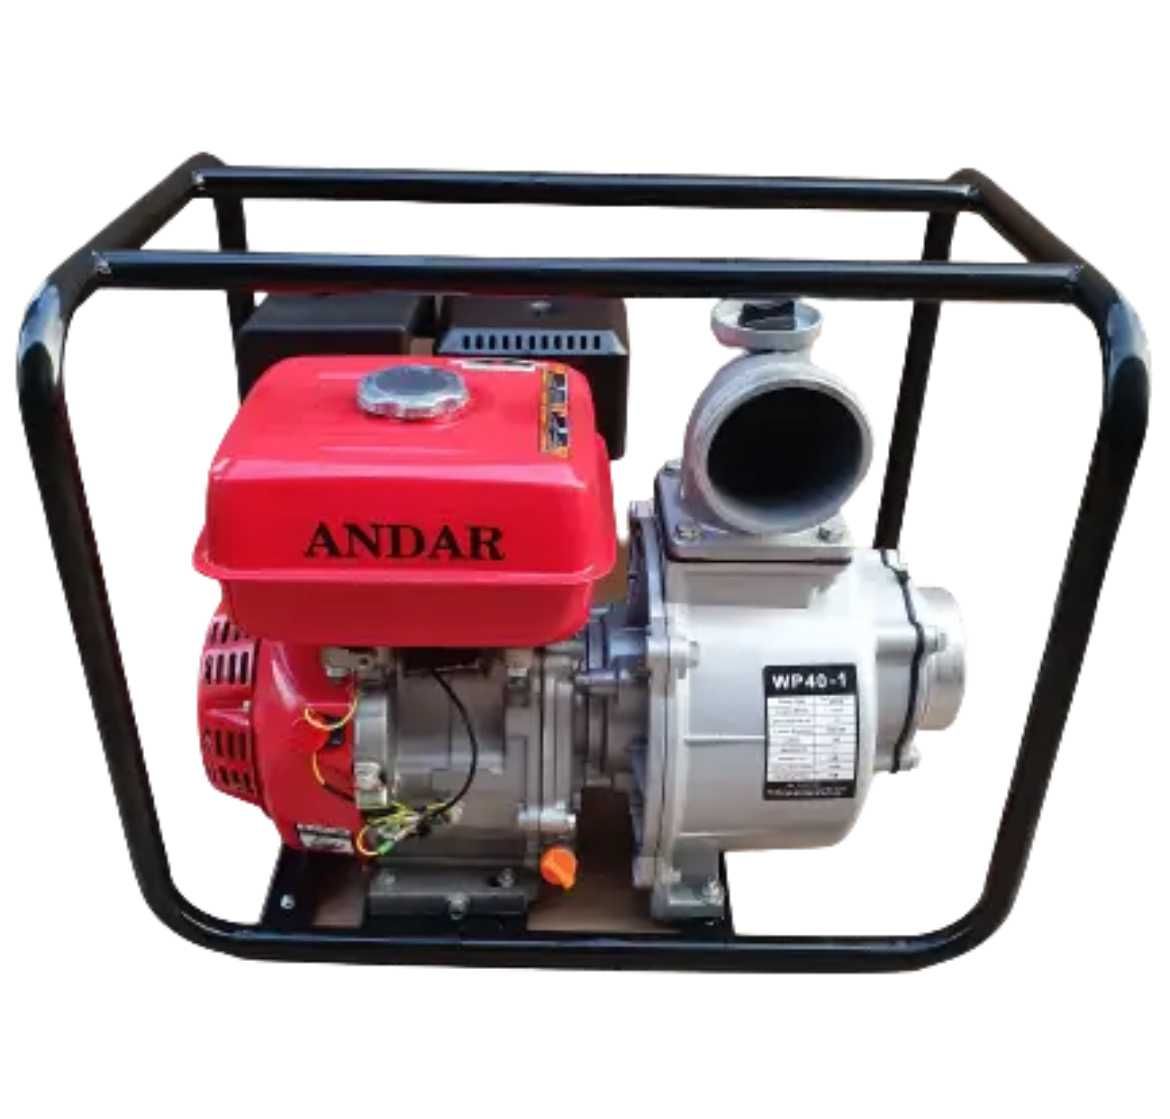 Бензинова мотопомпа (ANDAR) Андар WP 40-1 для поливу